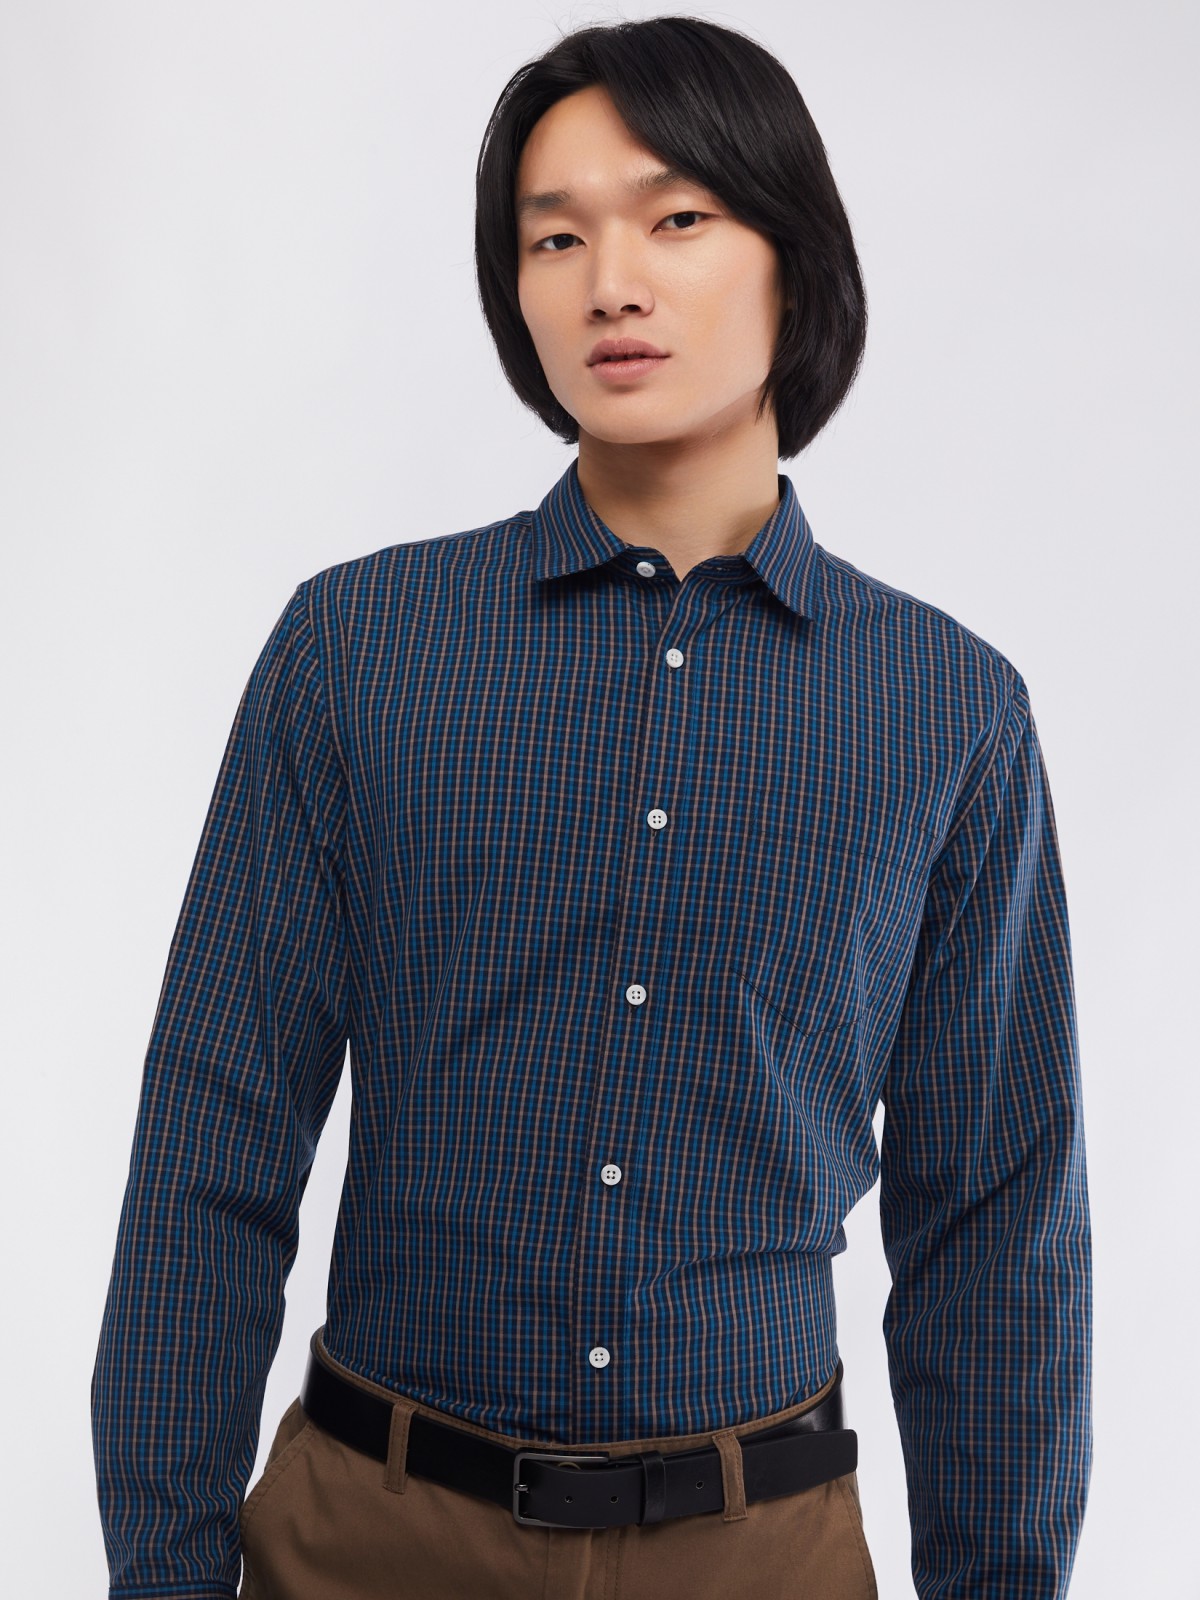 Офисная рубашка прямого силуэта с узором в клетку zolla 014112159012, цвет темно-синий, размер XL